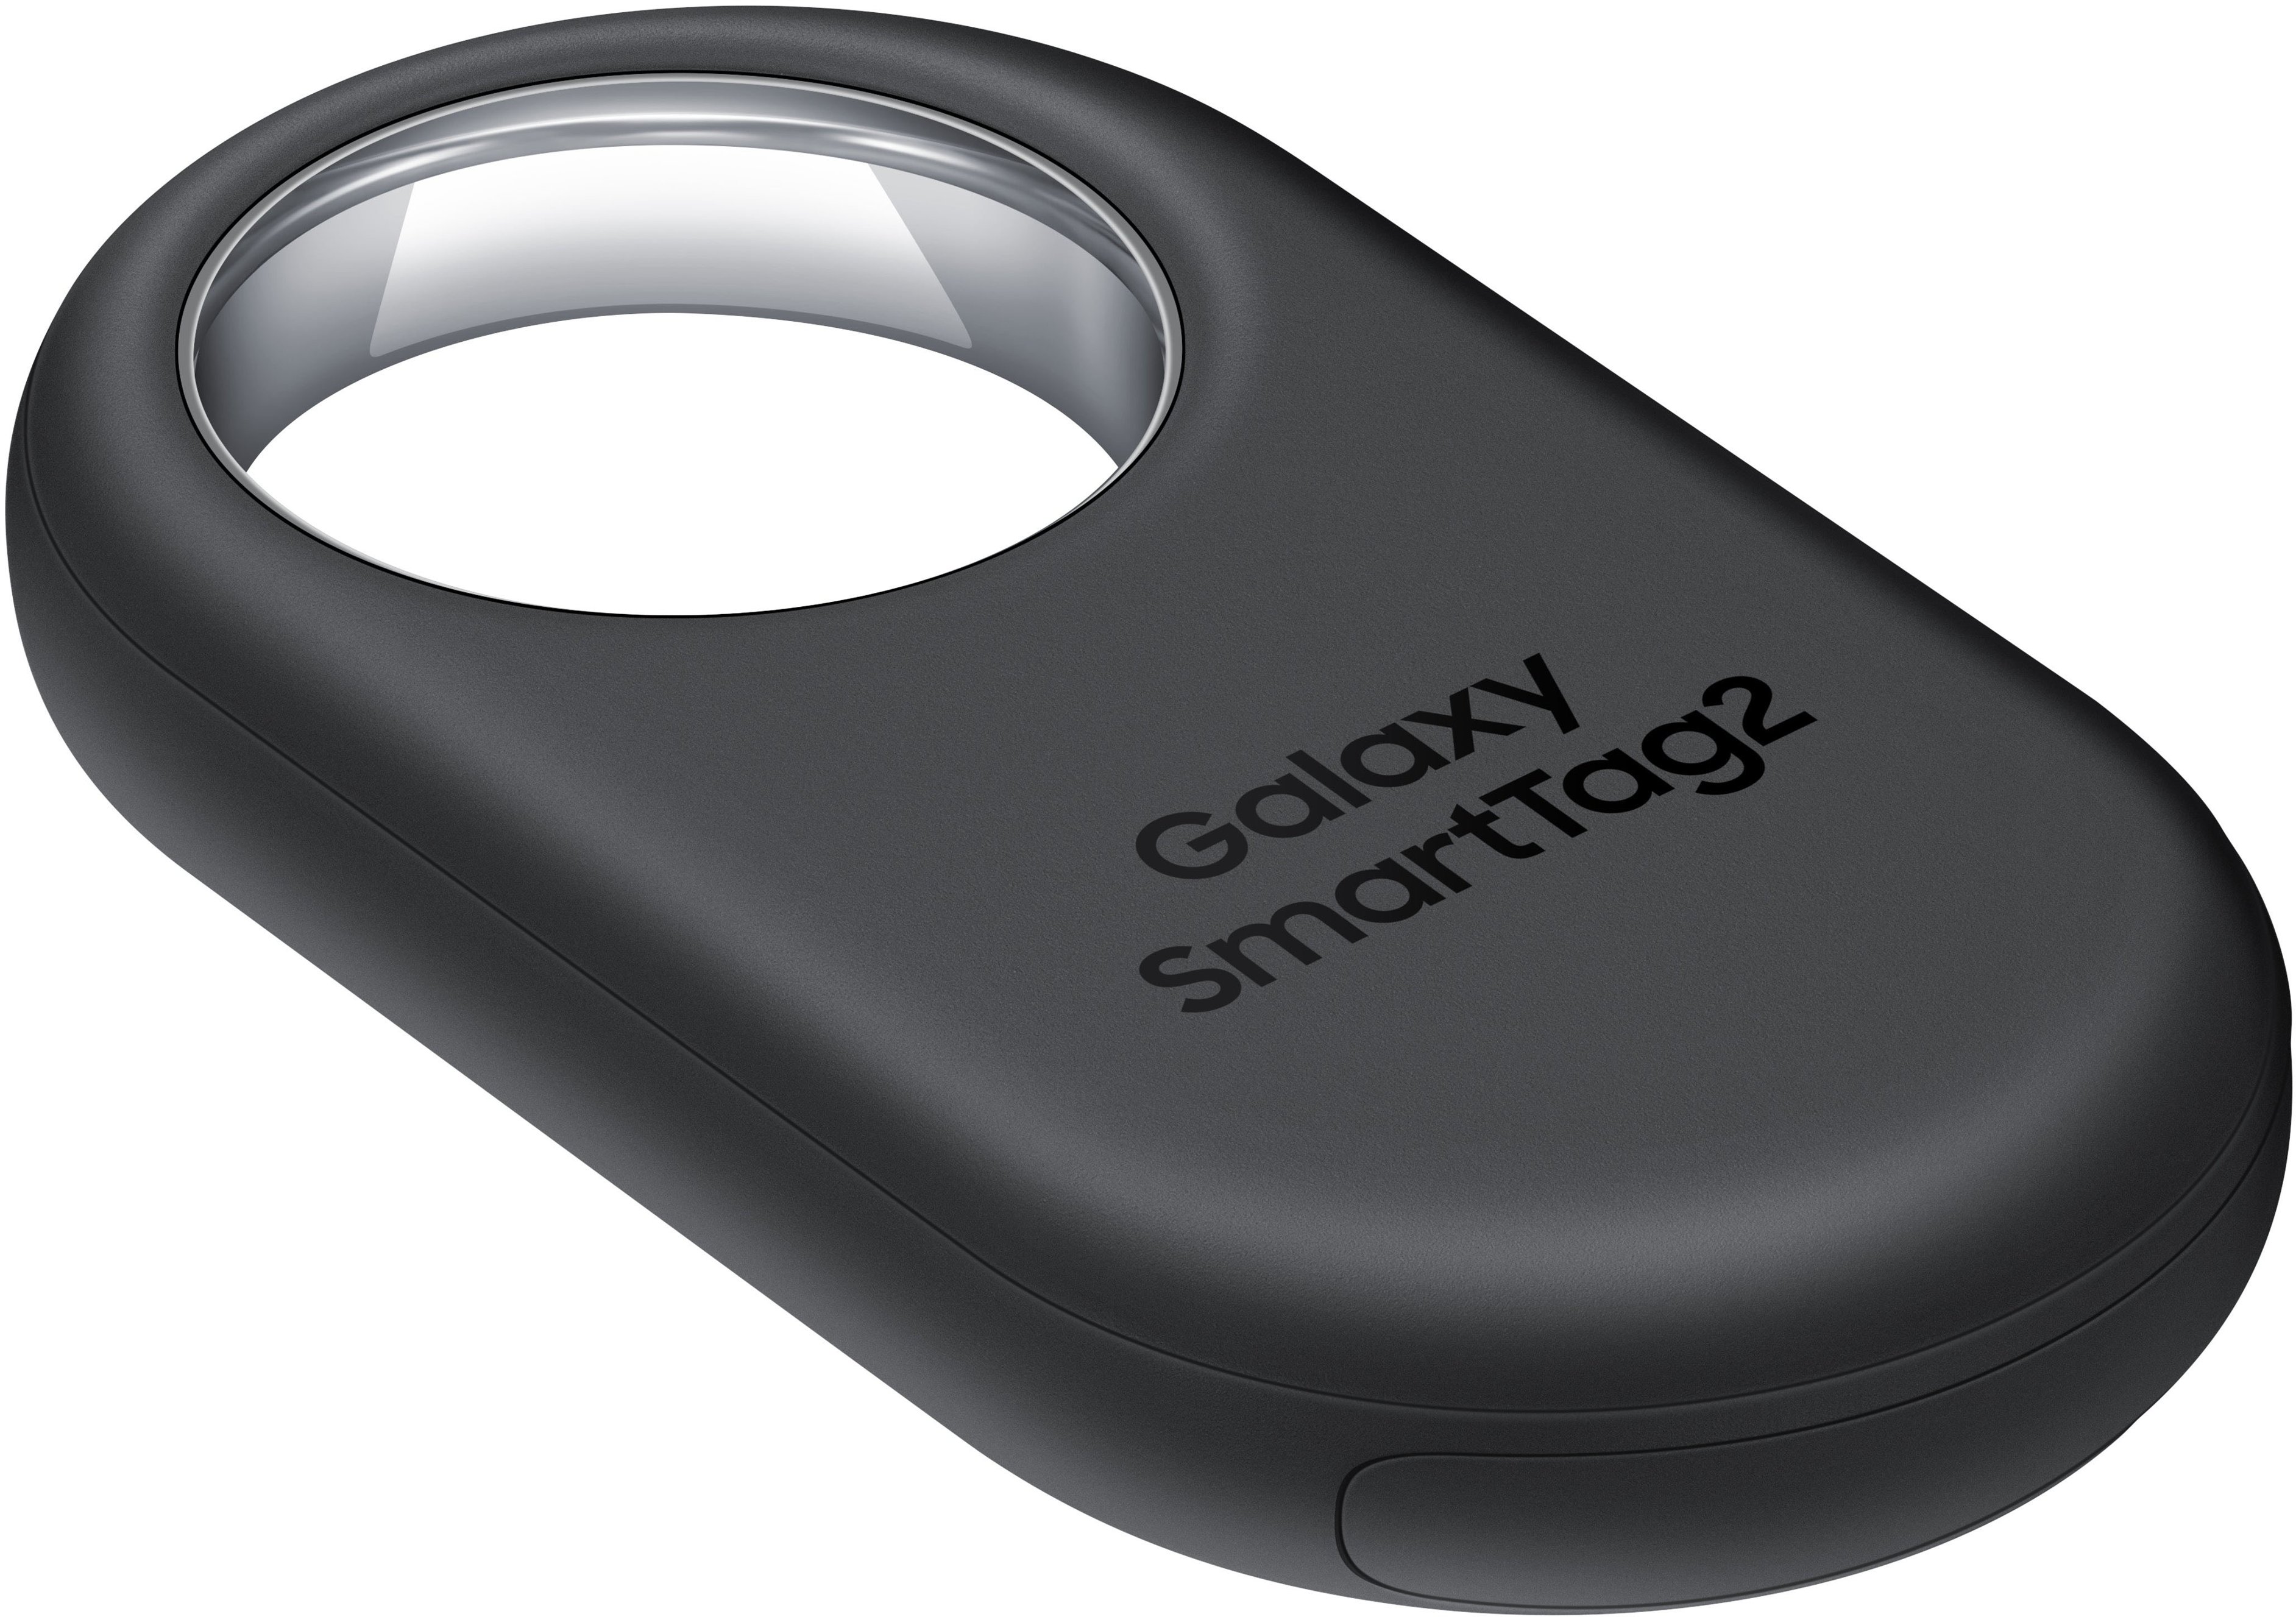 Tracker GPS SAMSUNG Galaxy SmartTag2 Universel Pack de 4